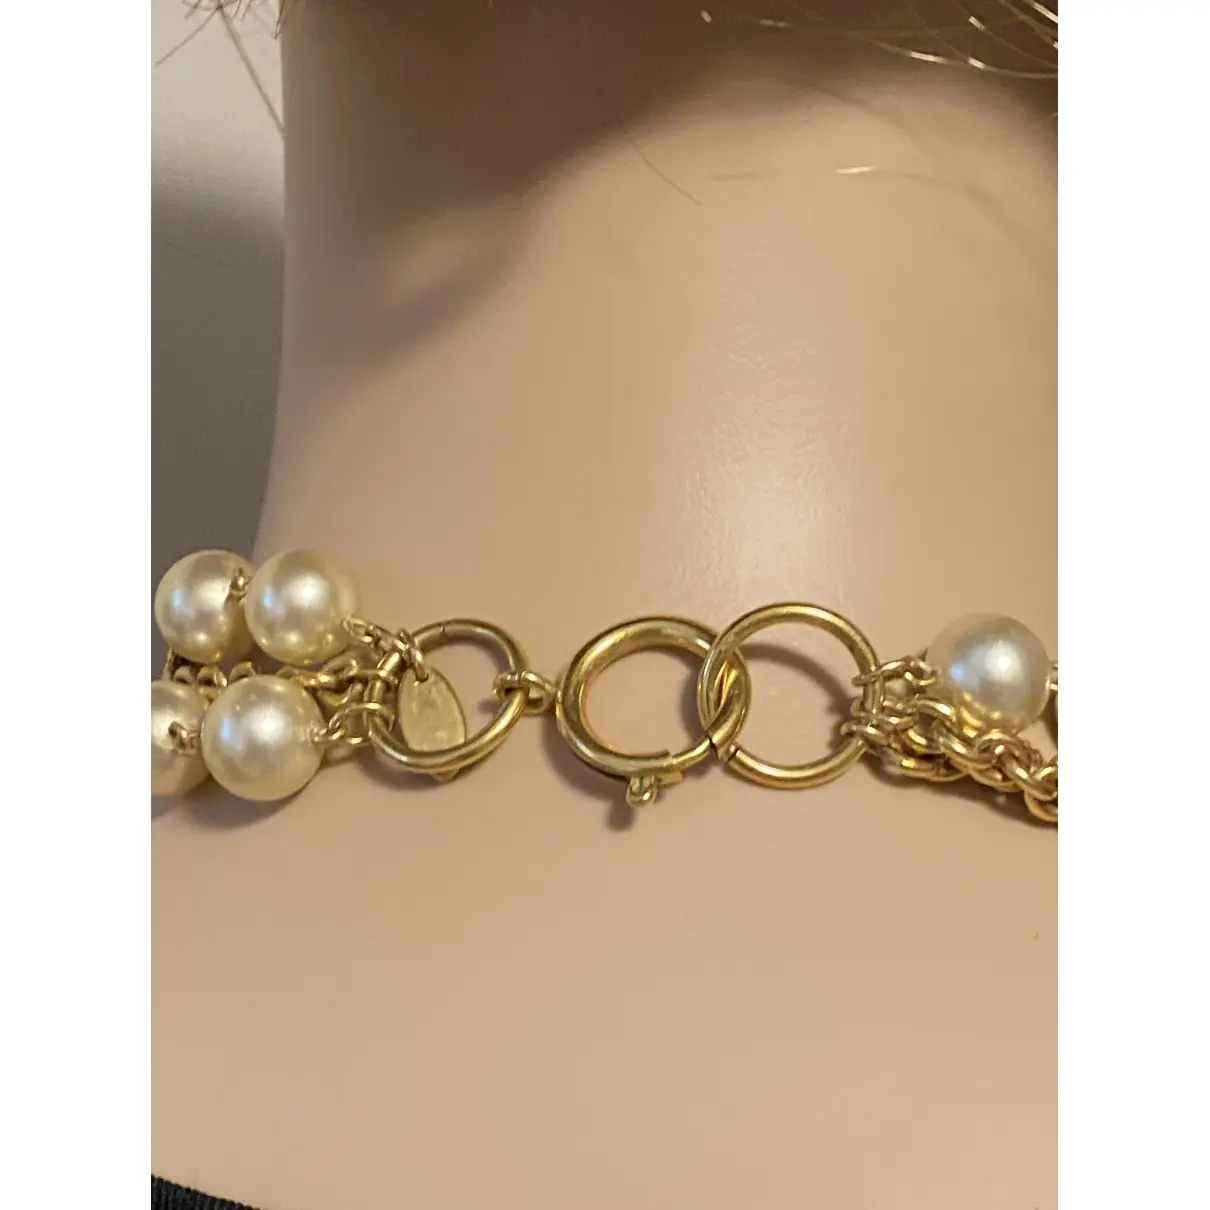 Chanel Necklace for sale - Vintage